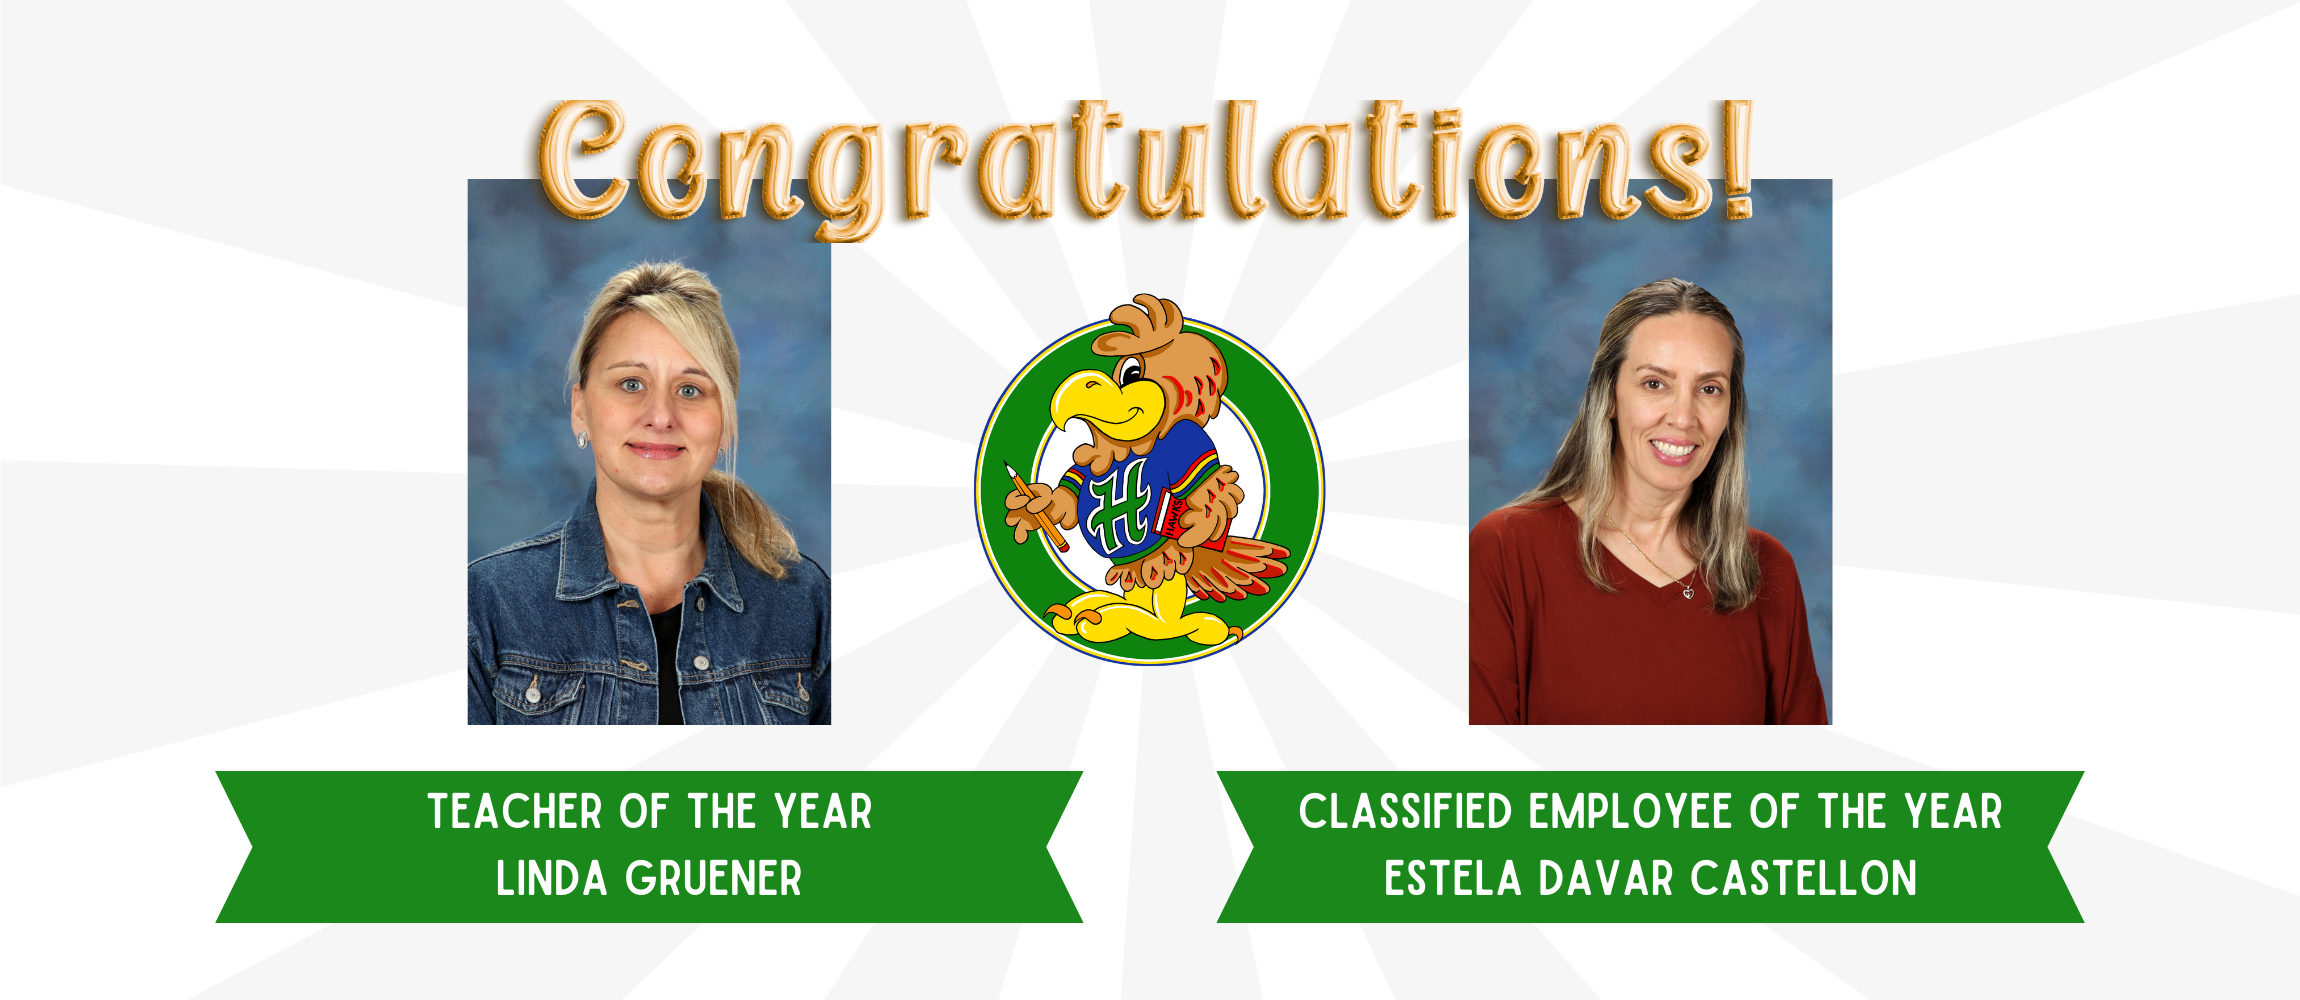 Congratulations Teacher of the Year Linda Gruener and Classified Employee of the Year Estela Davar Castellon